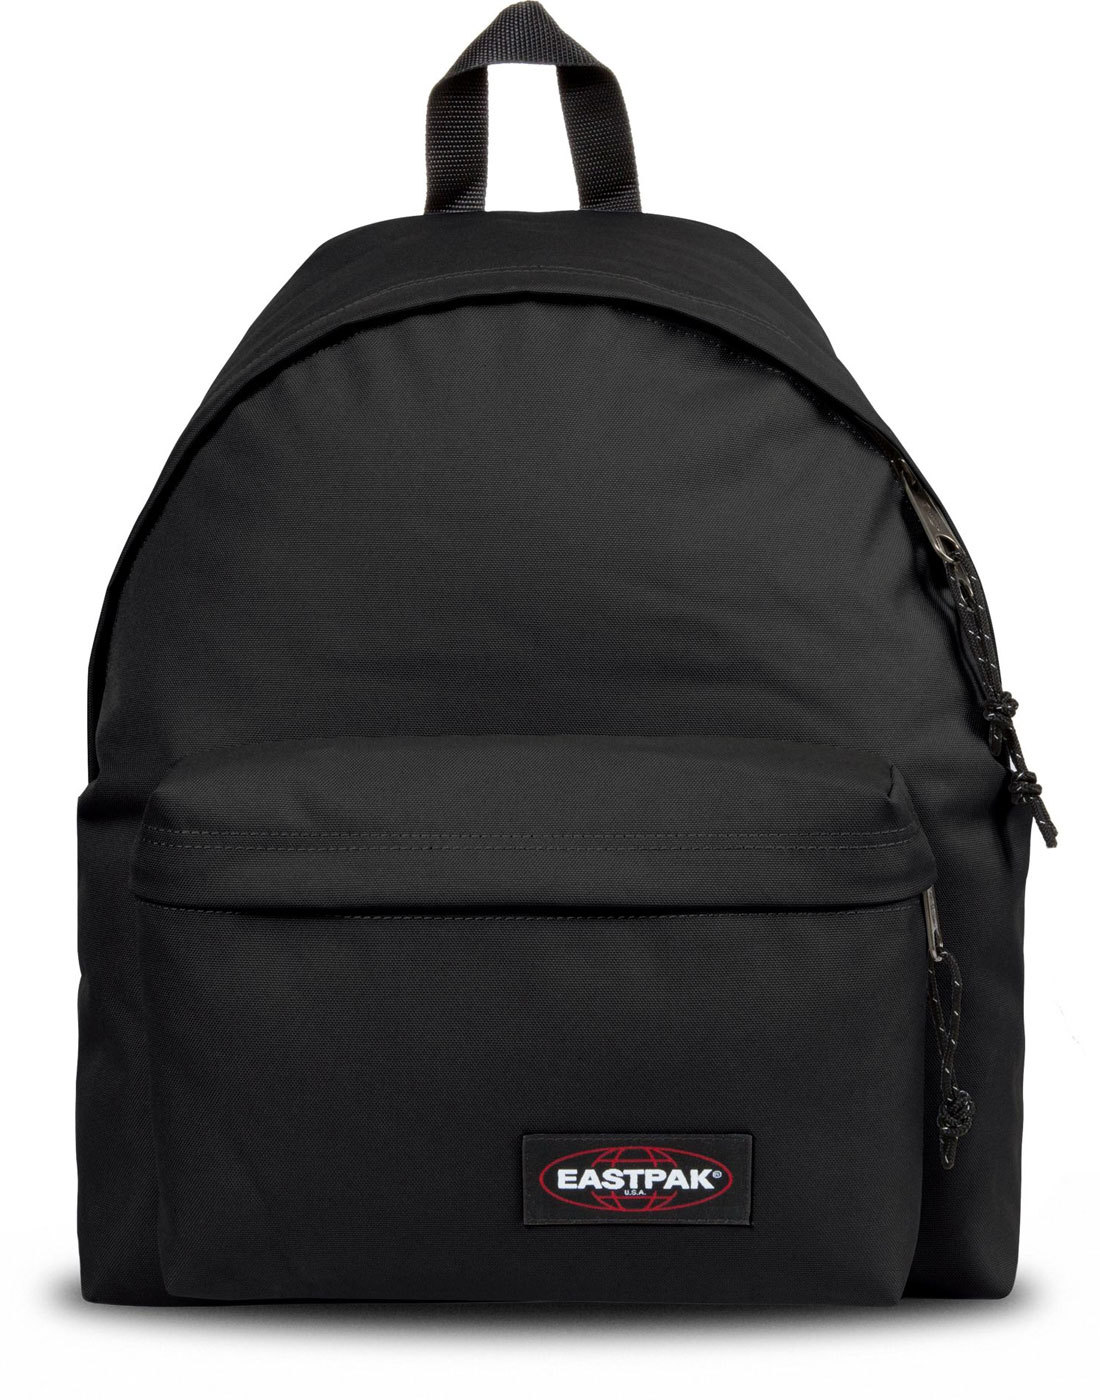 EASTPAK Padded Pak'r Retro 70s Backpack in Classic Black